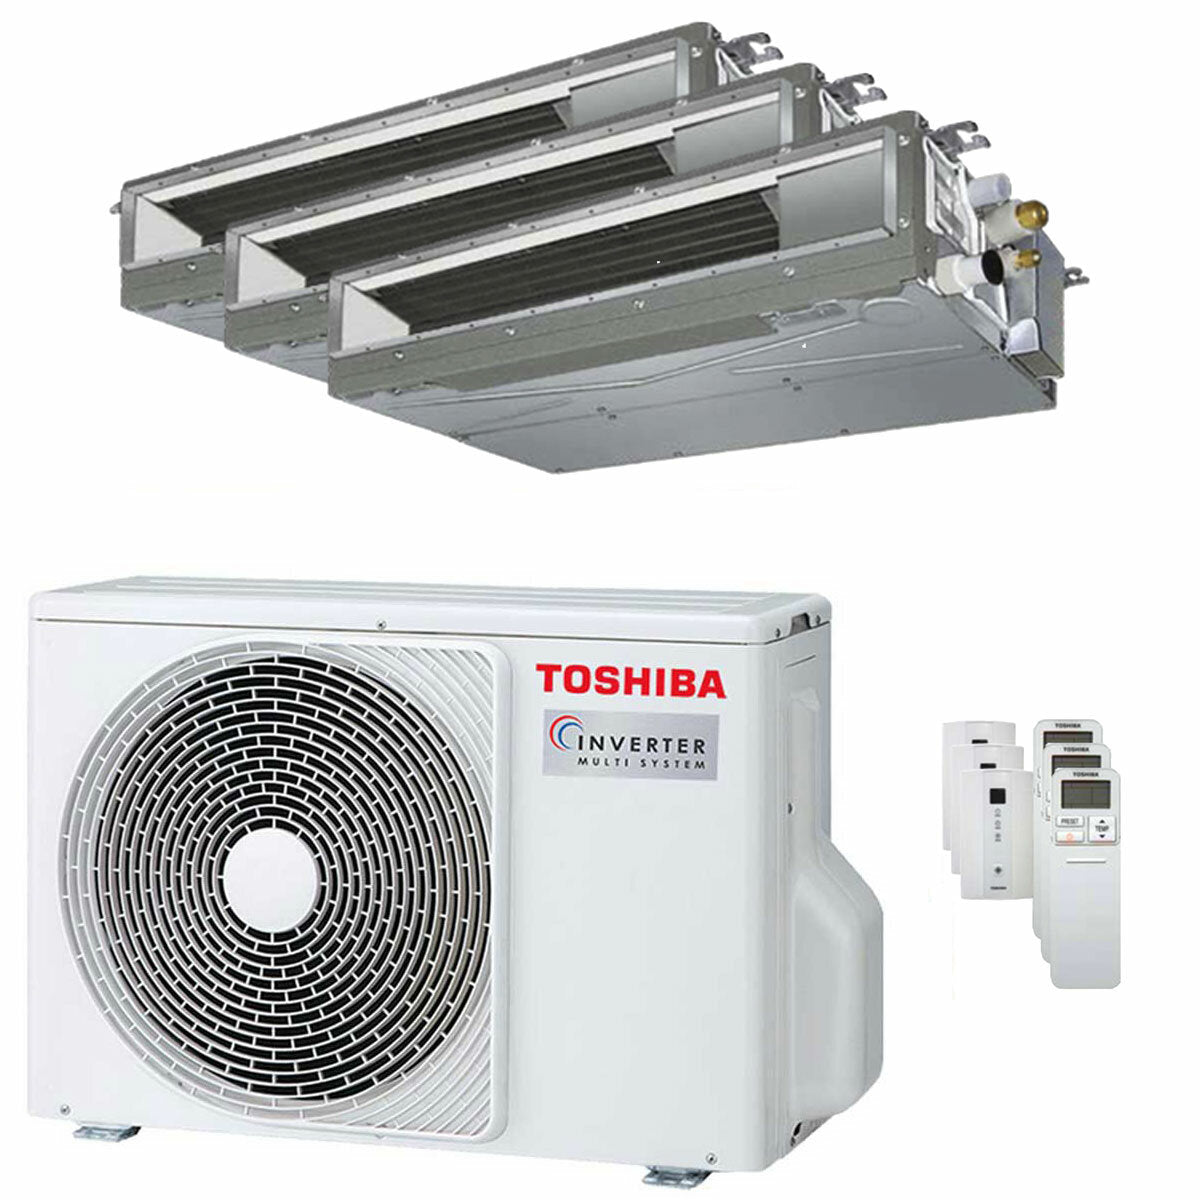 Toshiba ducted air conditioner U2 trial split 7000+9000+16000 BTU inverter A+++ external unit 5.2 kW